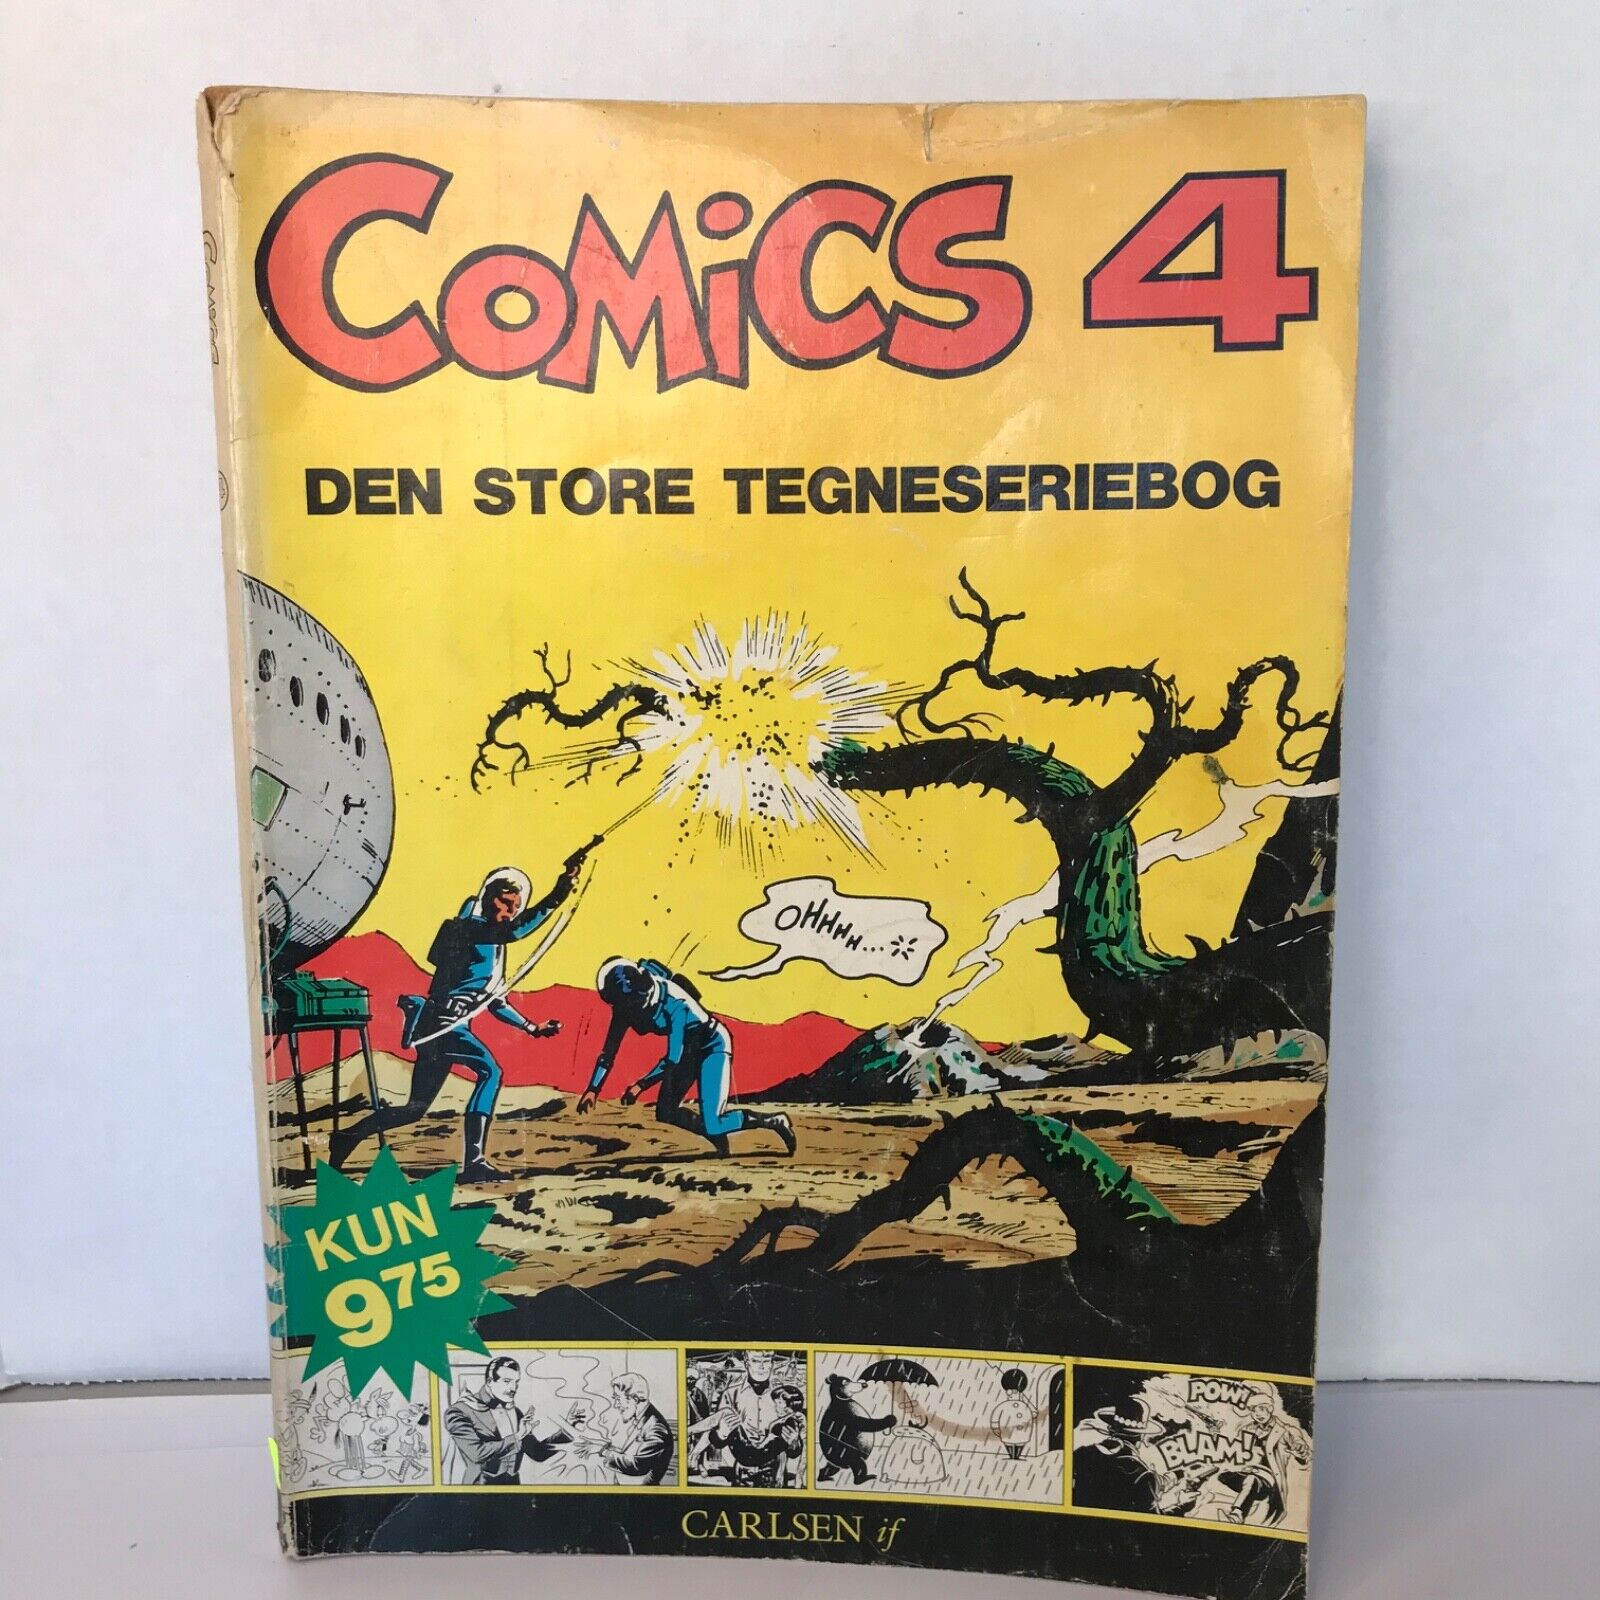 VTG 1973 Comics 4 Book Den Store Tegneseriebog Carlsen Pub Finland 8756204019*